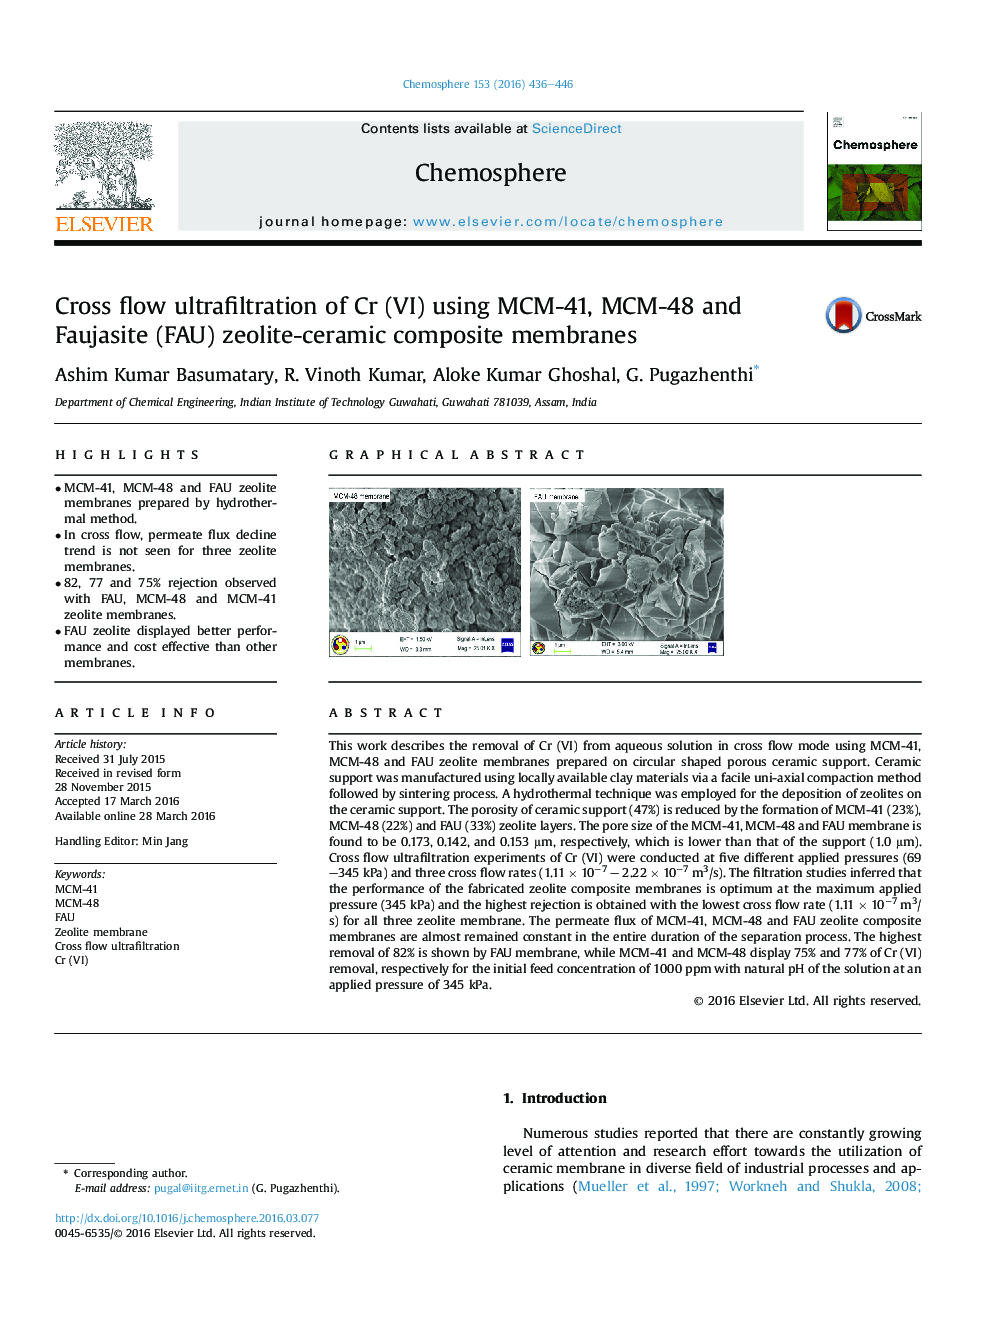 Cross flow ultrafiltration of Cr (VI) using MCM-41, MCM-48 and Faujasite (FAU) zeolite-ceramic composite membranes